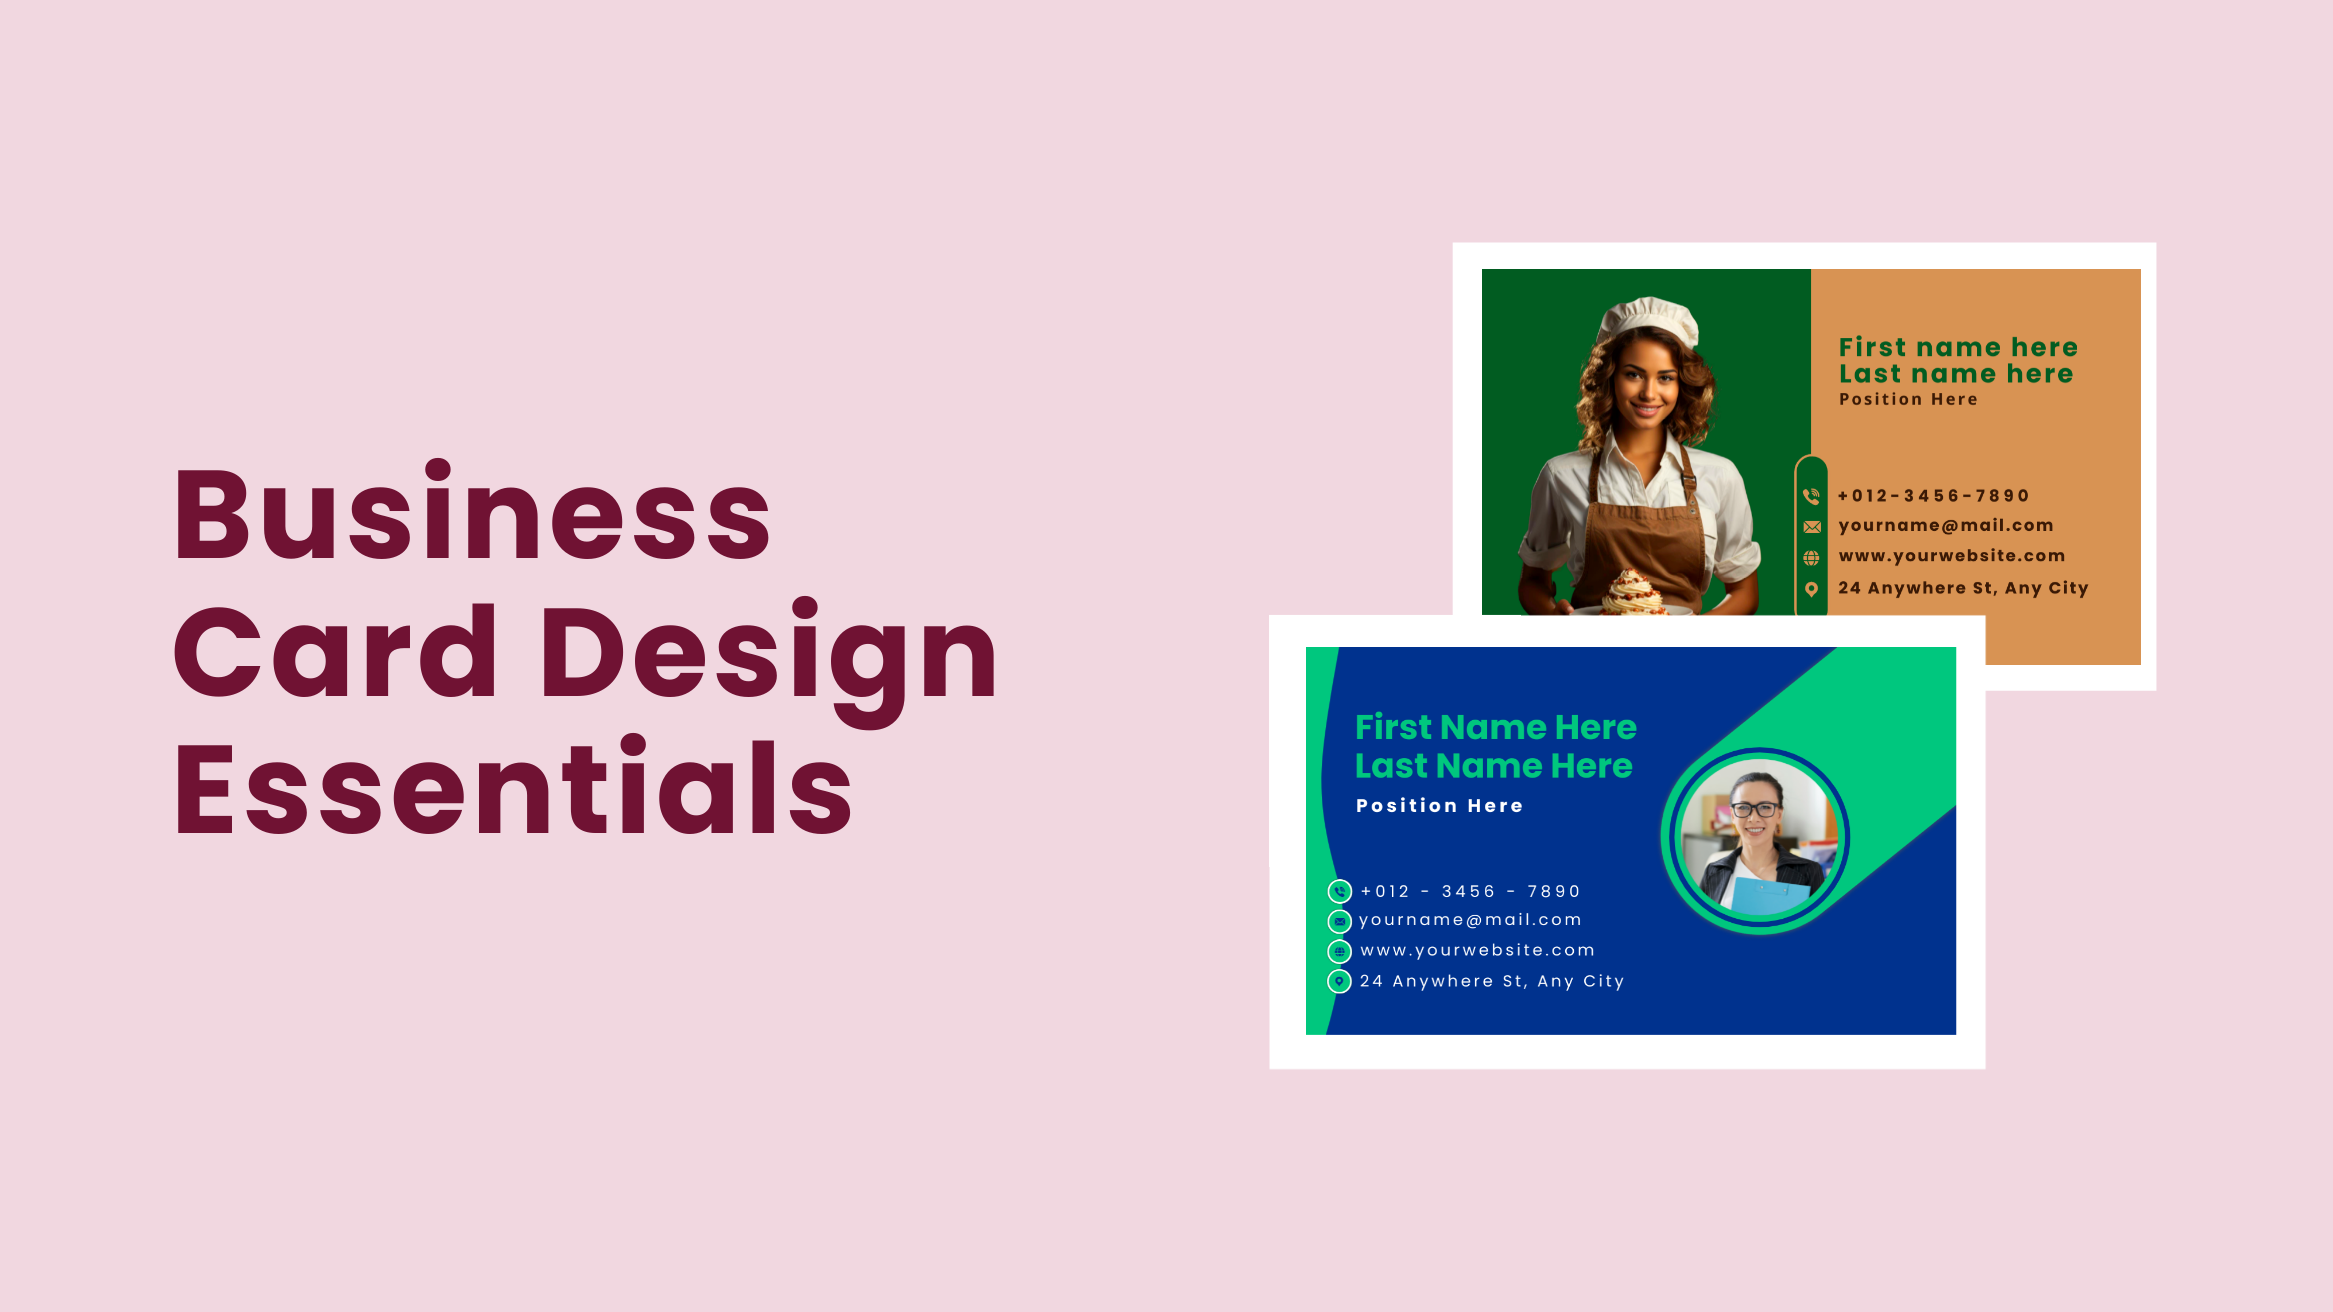 Business Card Design Essentials